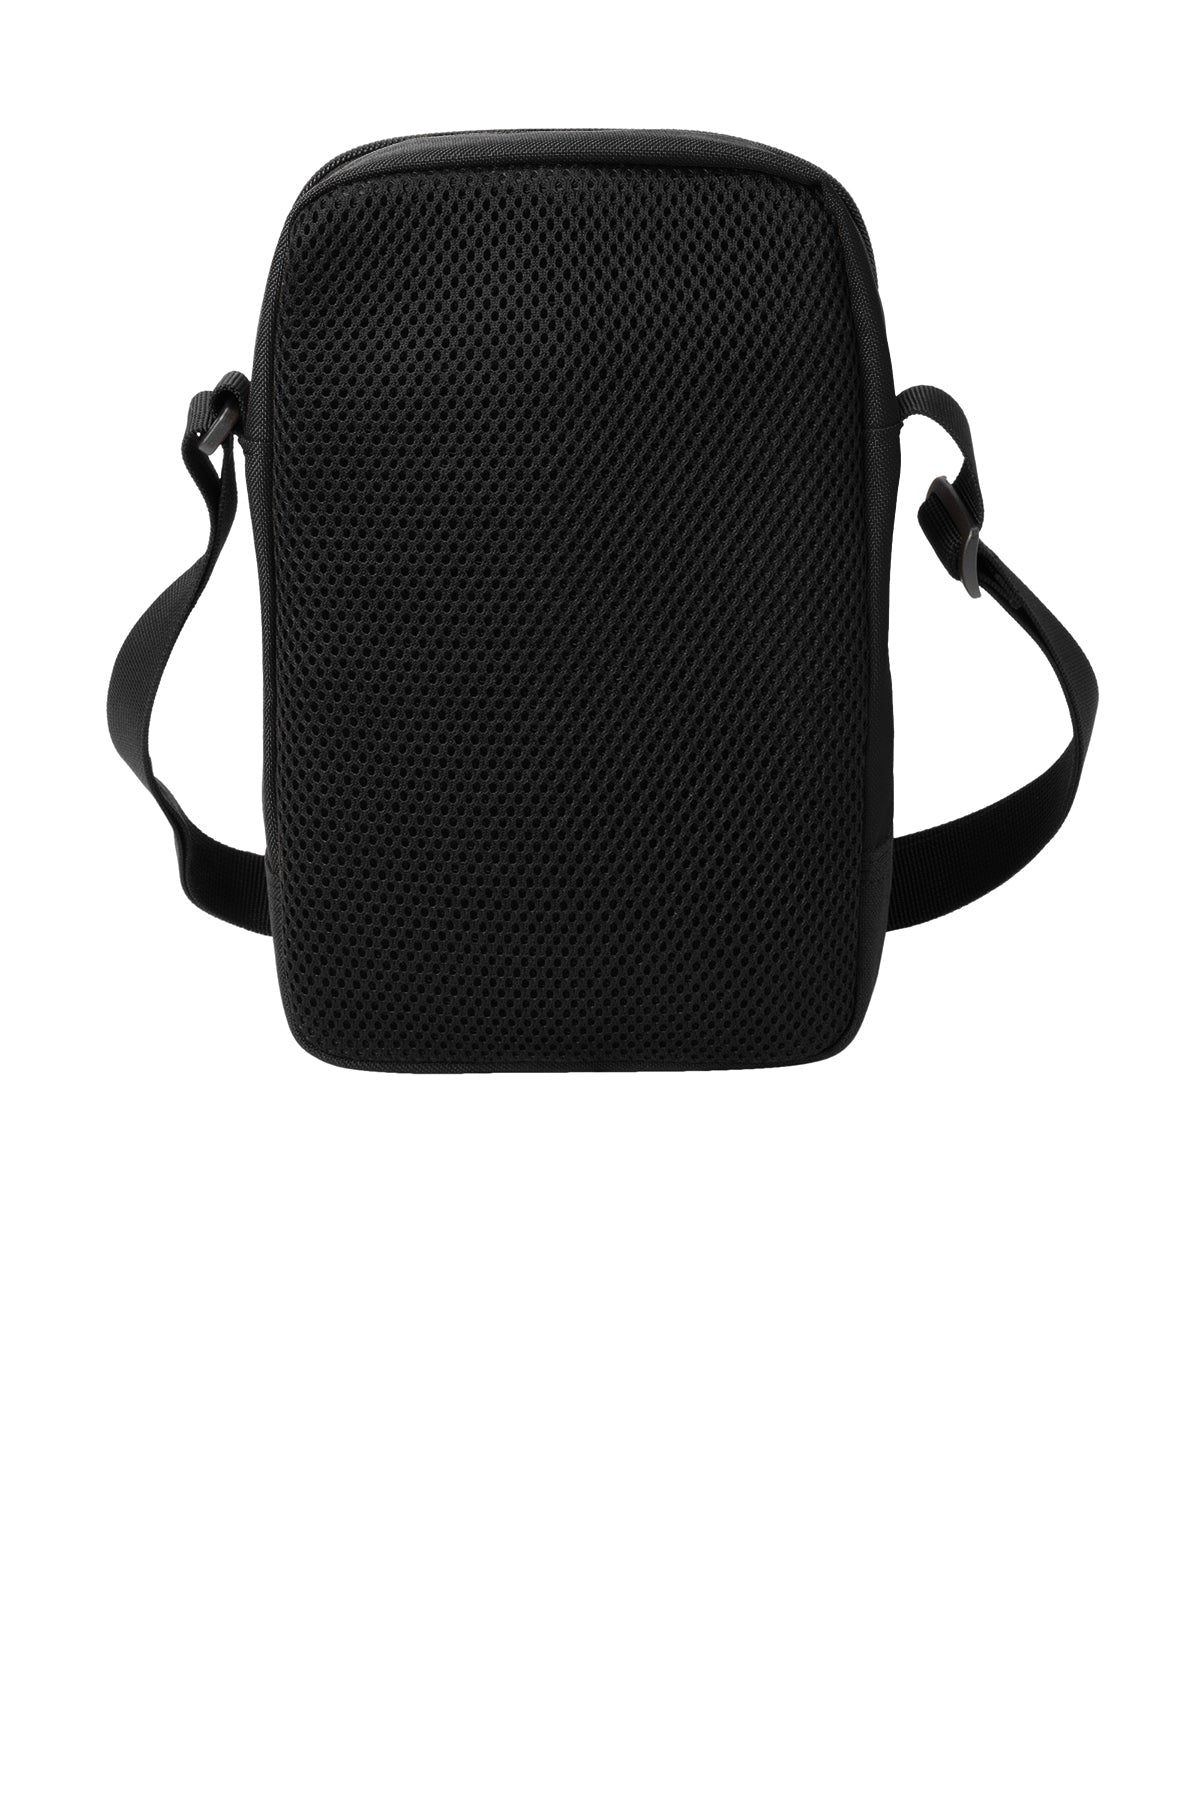 Carhartt Branded Crossbody Zip Bags, Black